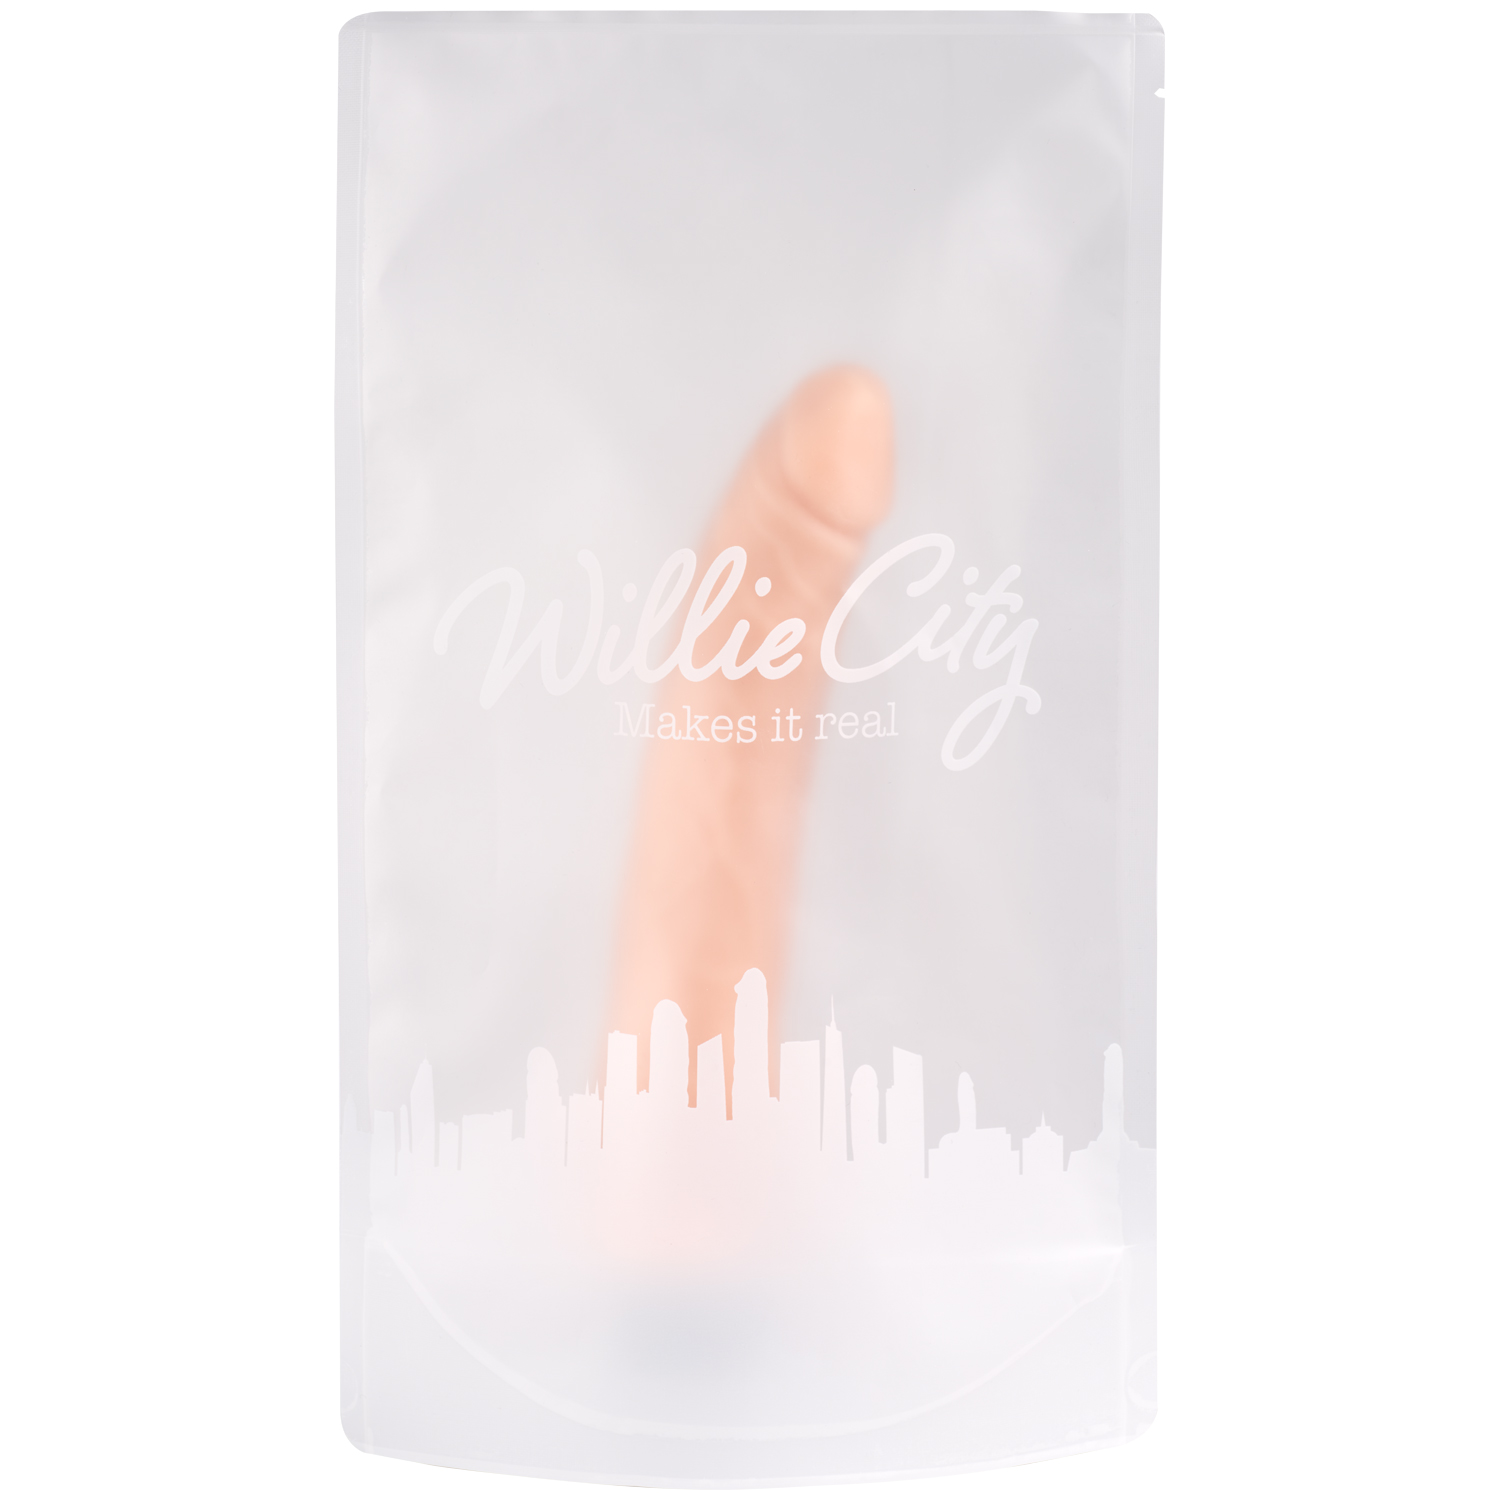 Willie City Realistic Multispeed Dildo Vibrator 24 cm    - Nude thumbnail